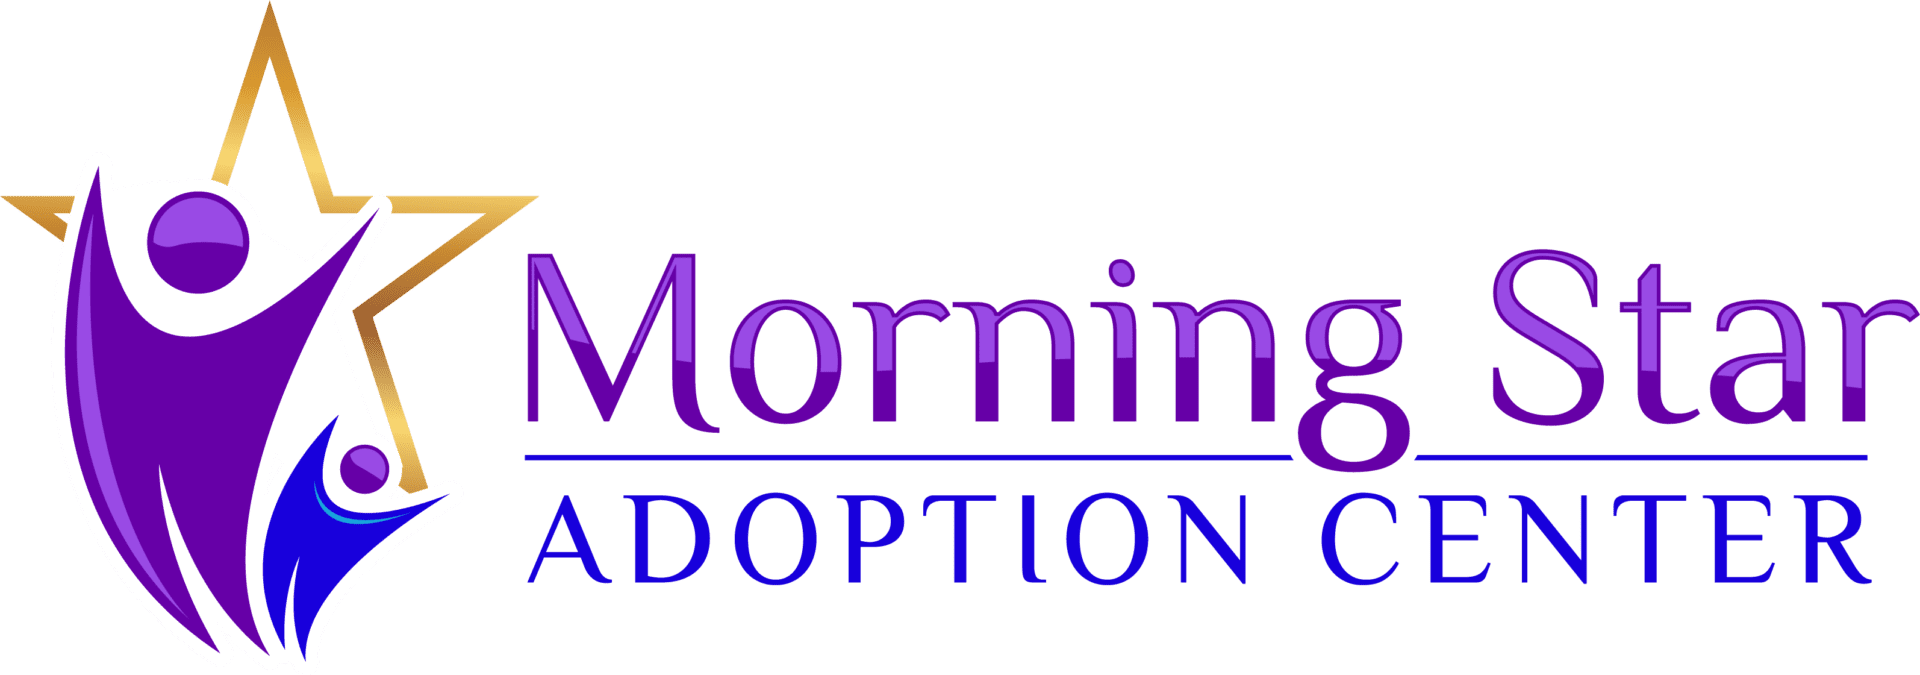 Morning Star Adoption Center